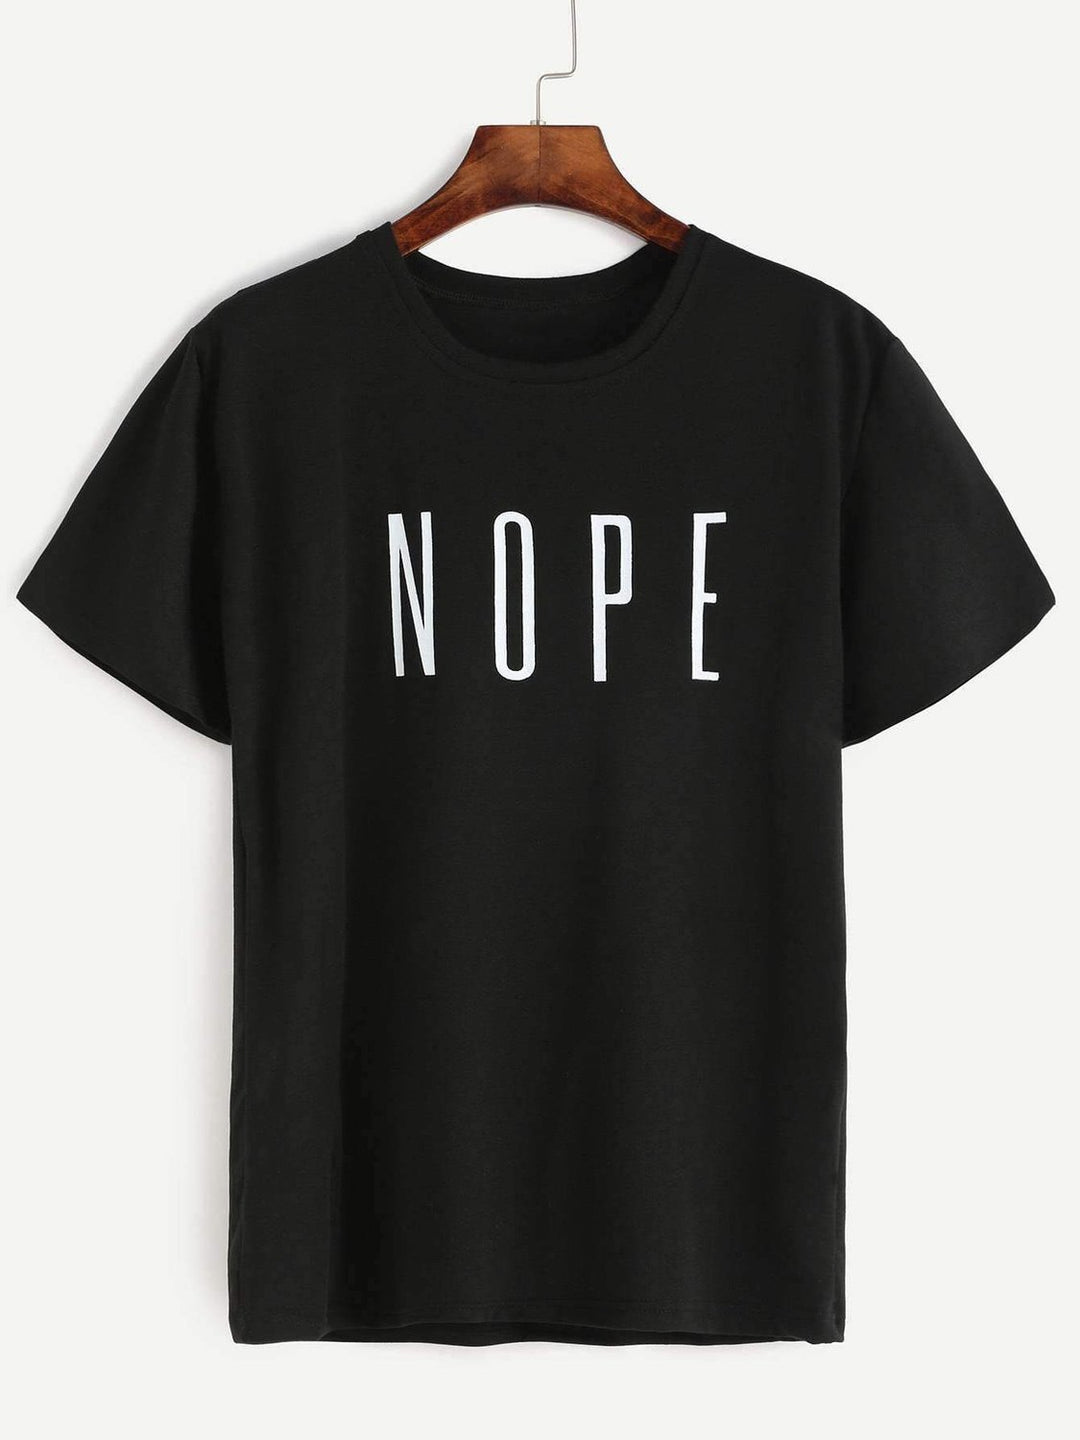 "Nope" Womens T-Shirt - SurgeStyle Boutique